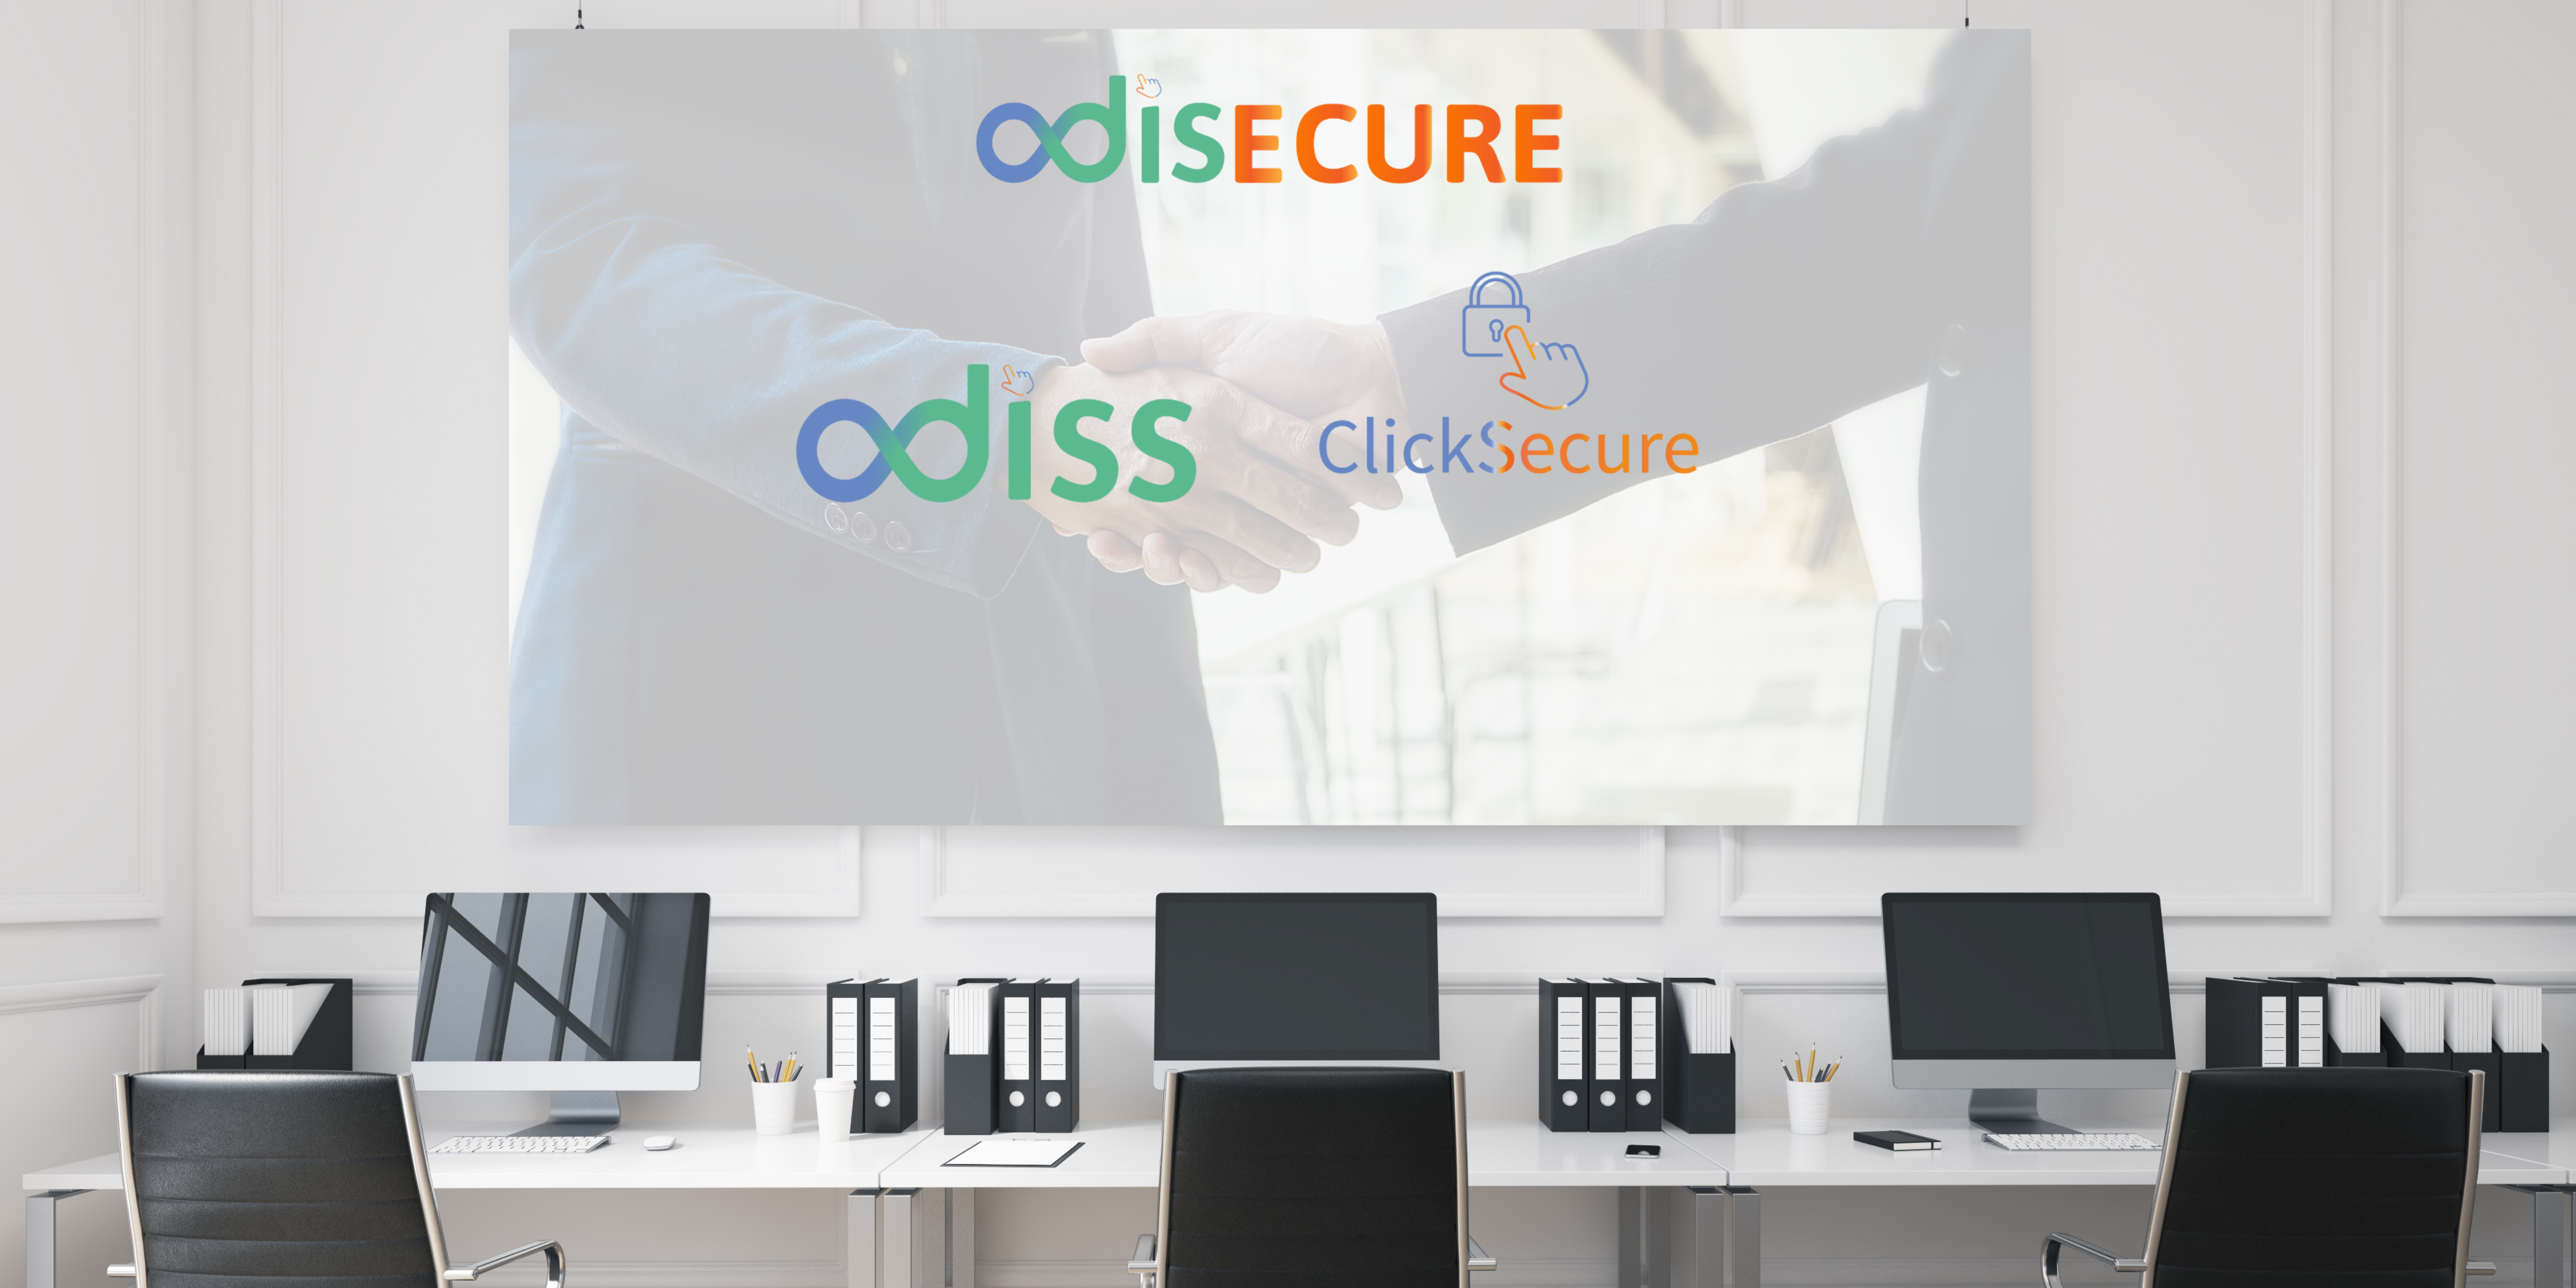 Odiss rejoint ClickSecure et intègre le groupe Odisecure !